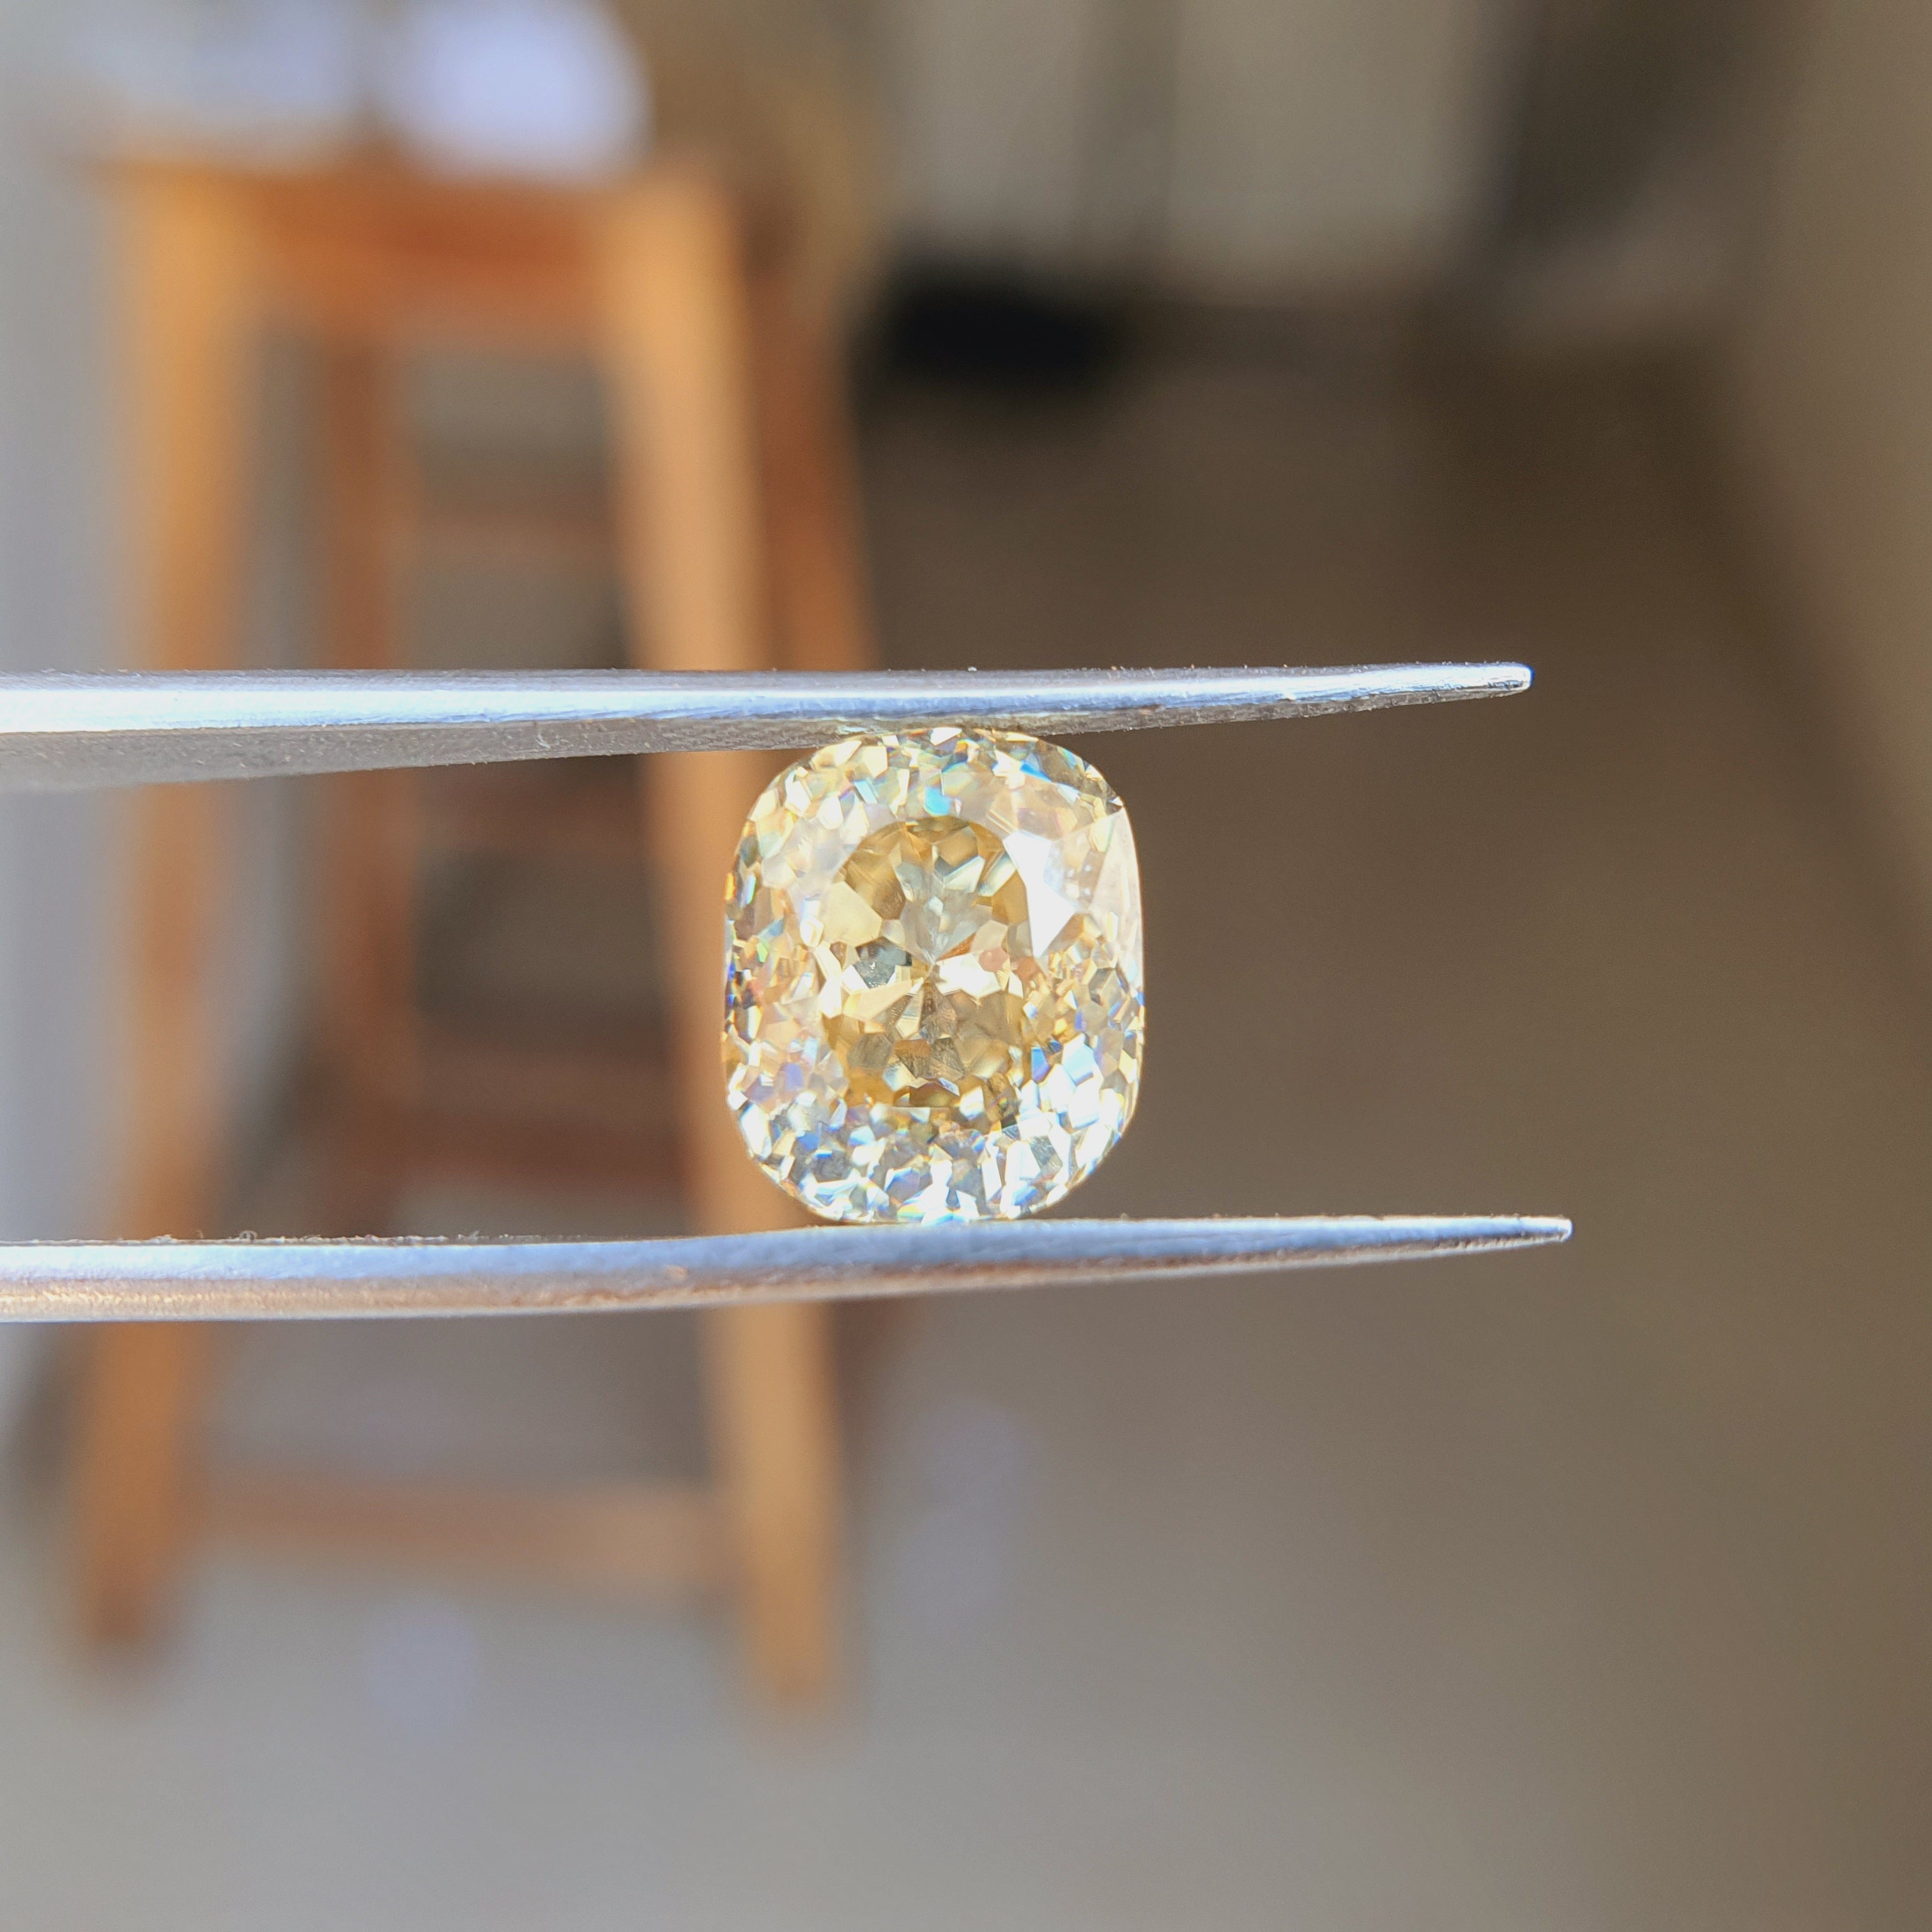 Portuguese Cut Loose Moissanite Diamond - Eurekalook